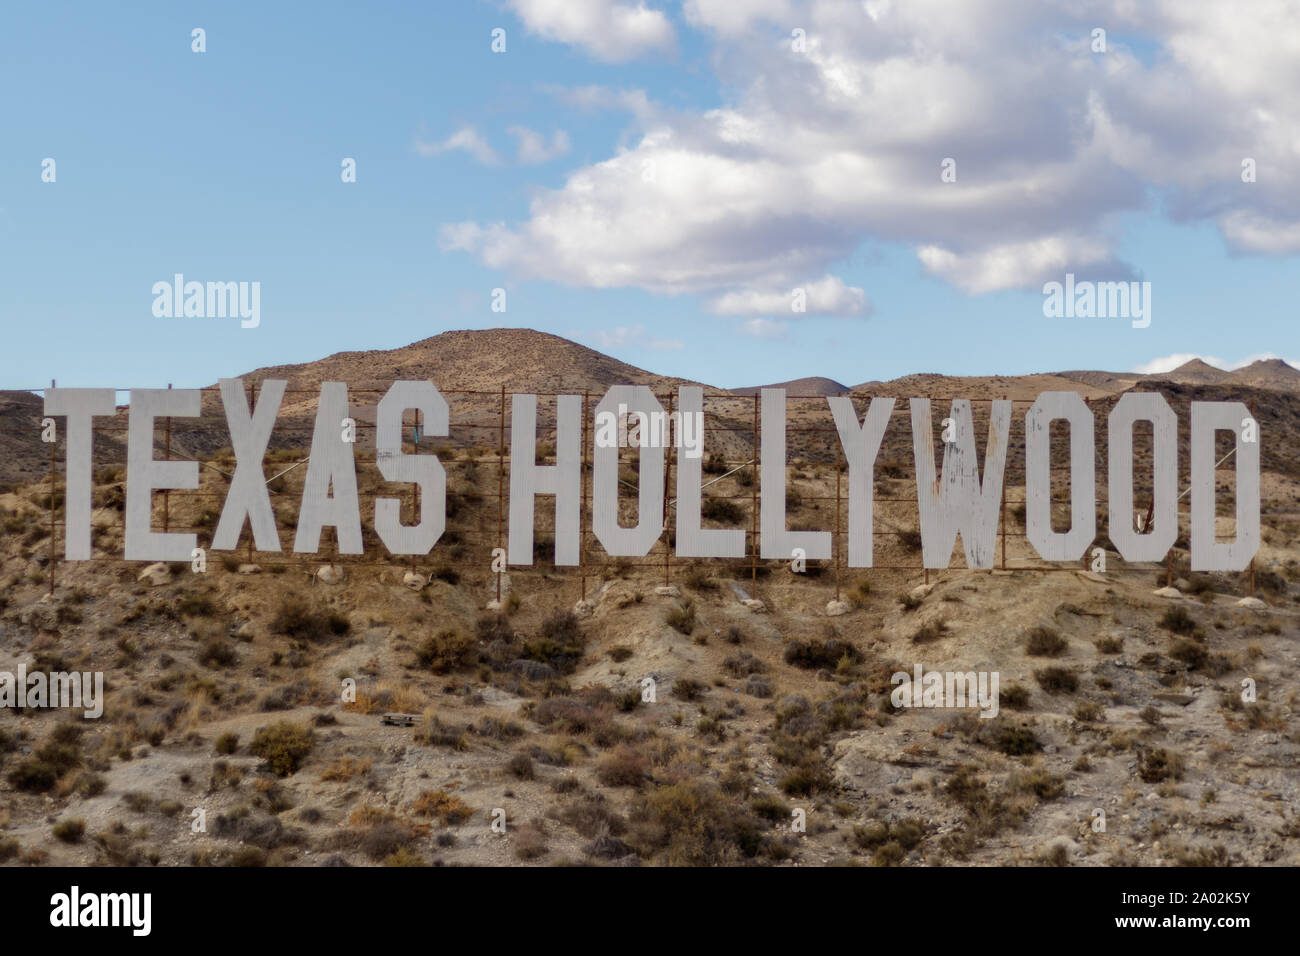 Almeria / Spain - January 26 2018: Texas Hollywood sign in Almeria Spain Stock Photo